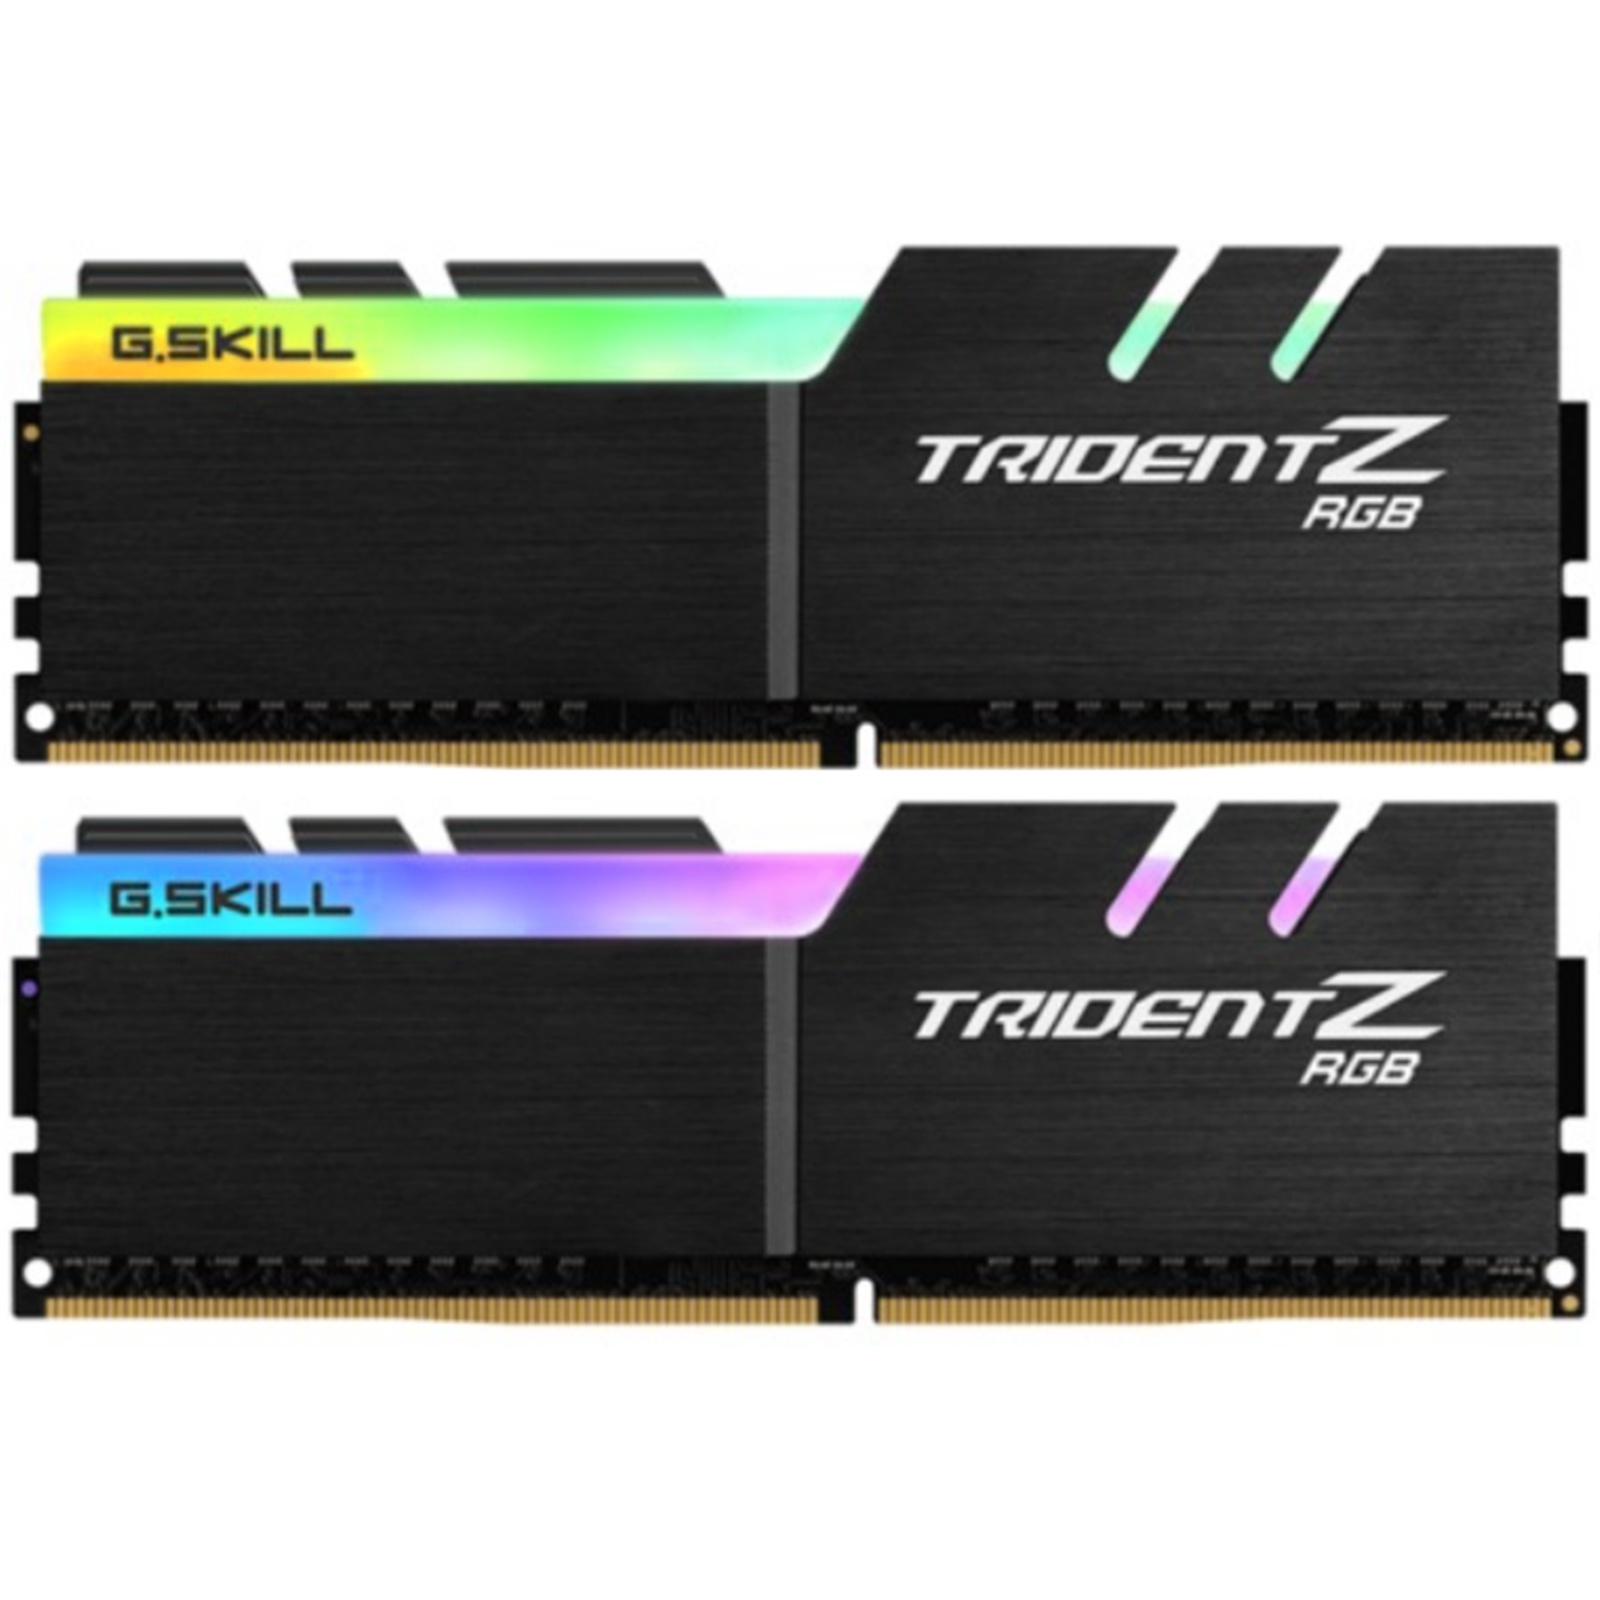 Buy the G.SKILL Trident Z RGB 32GB DDR4 Desktop RAM Kit 2x 16GB - 3200Mhz  -... ( F4-3200C16D-32GTZR ) online - PBTech.com/au